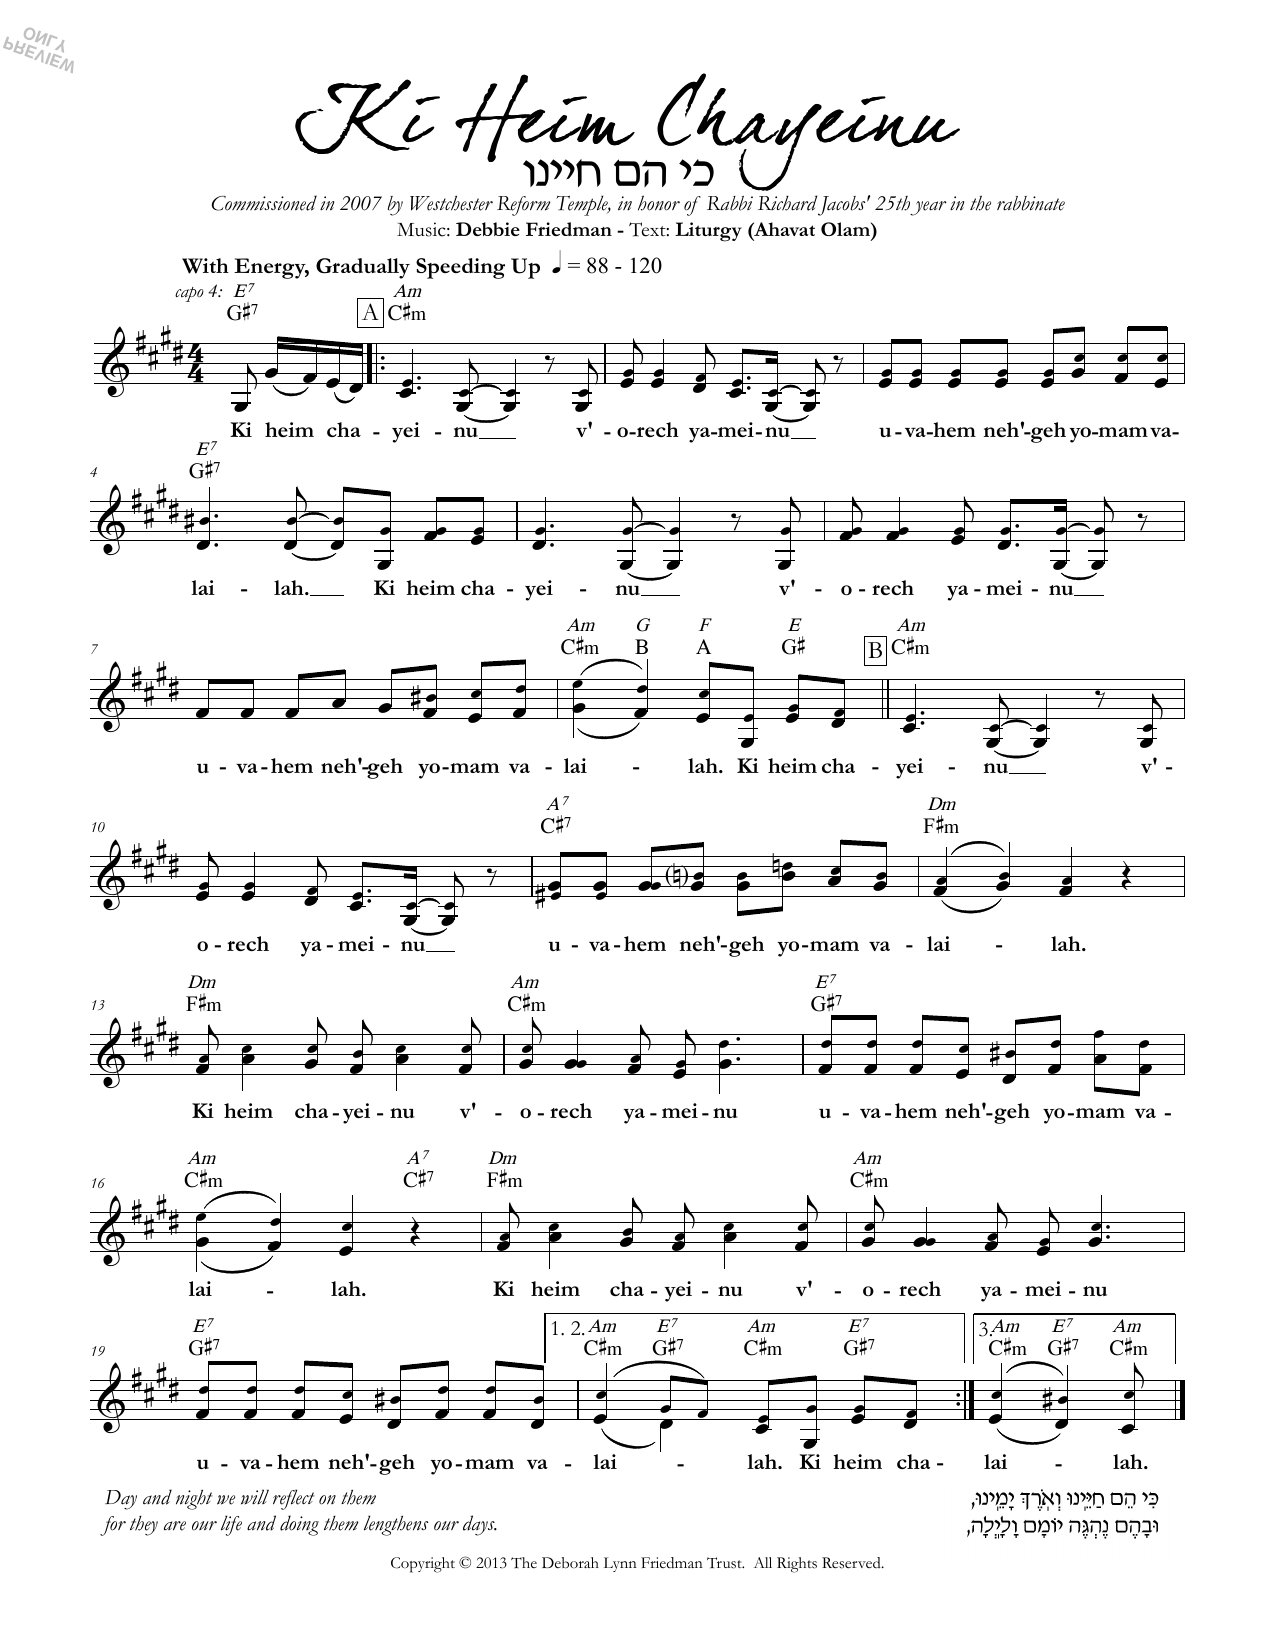 Download Debbie Friedman Ki Heim Chayeinu Sheet Music and learn how to play Lead Sheet / Fake Book PDF digital score in minutes